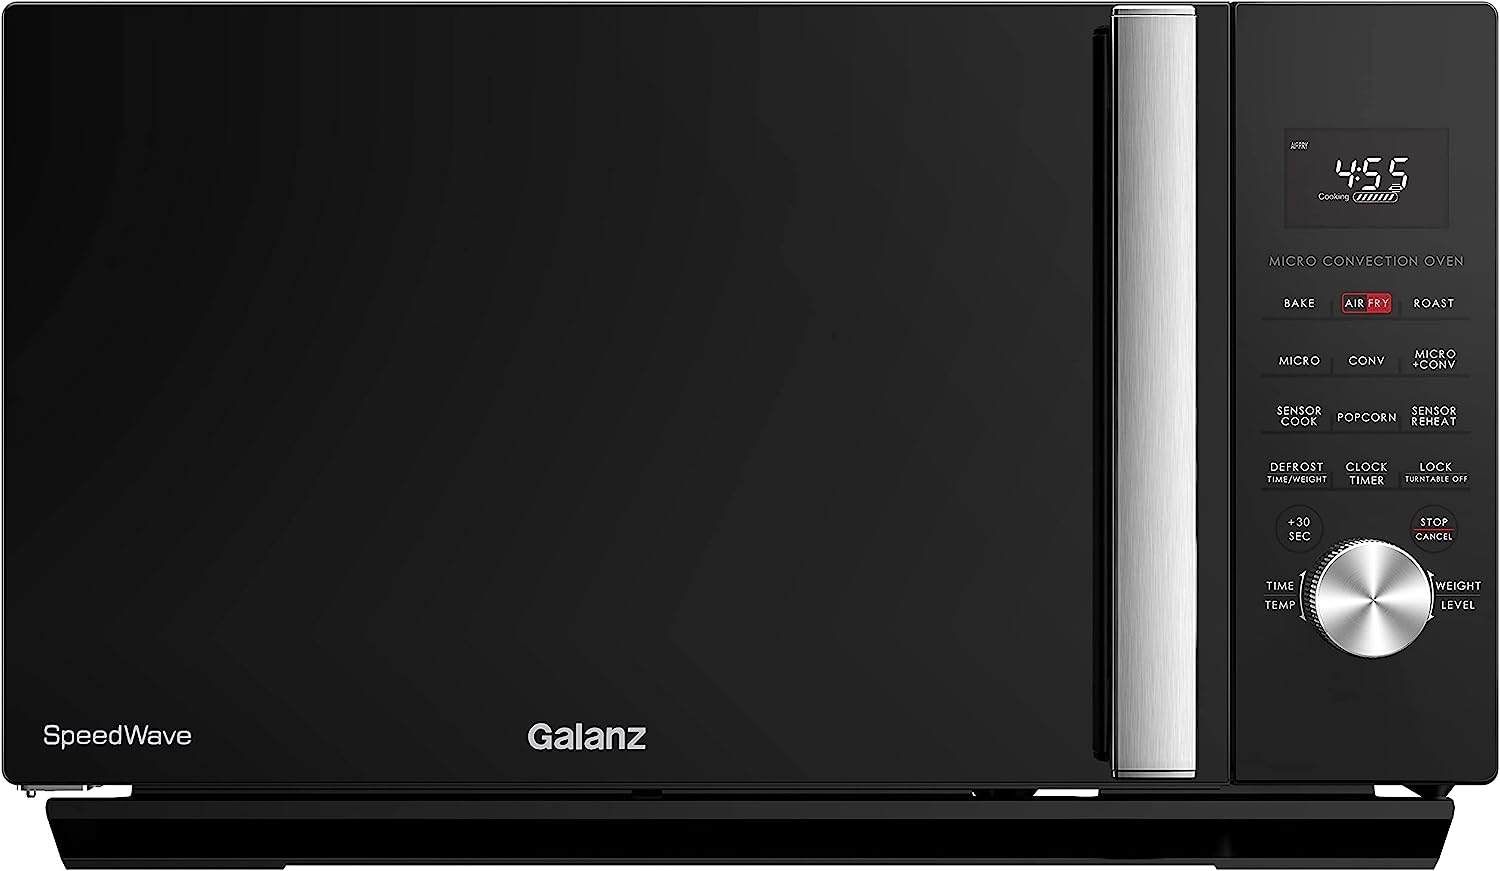 Galanz SpeedWave Microwave and nbsp;